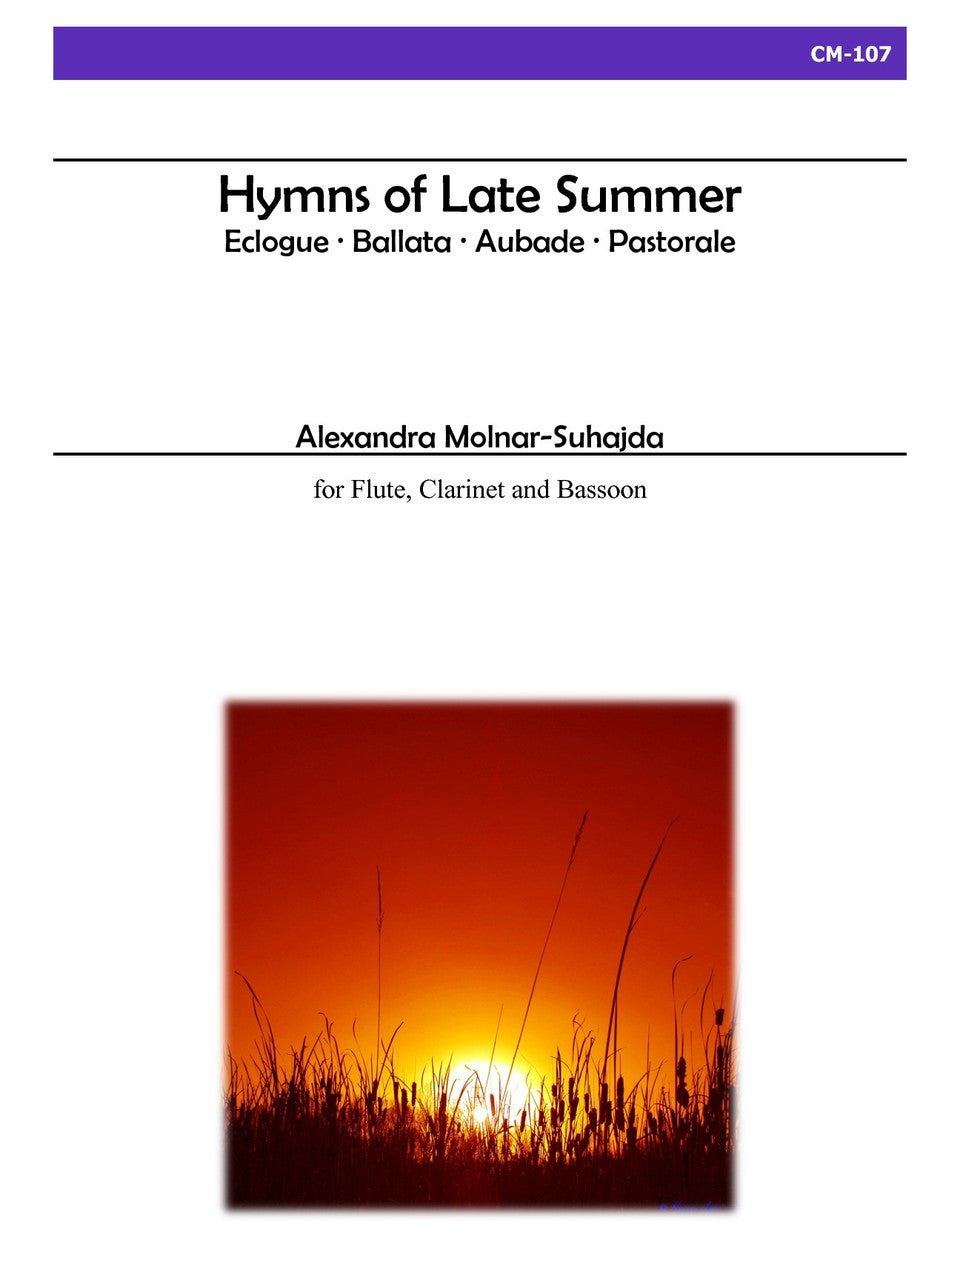 Molnar-Suhajda - Hymns of Late Summer